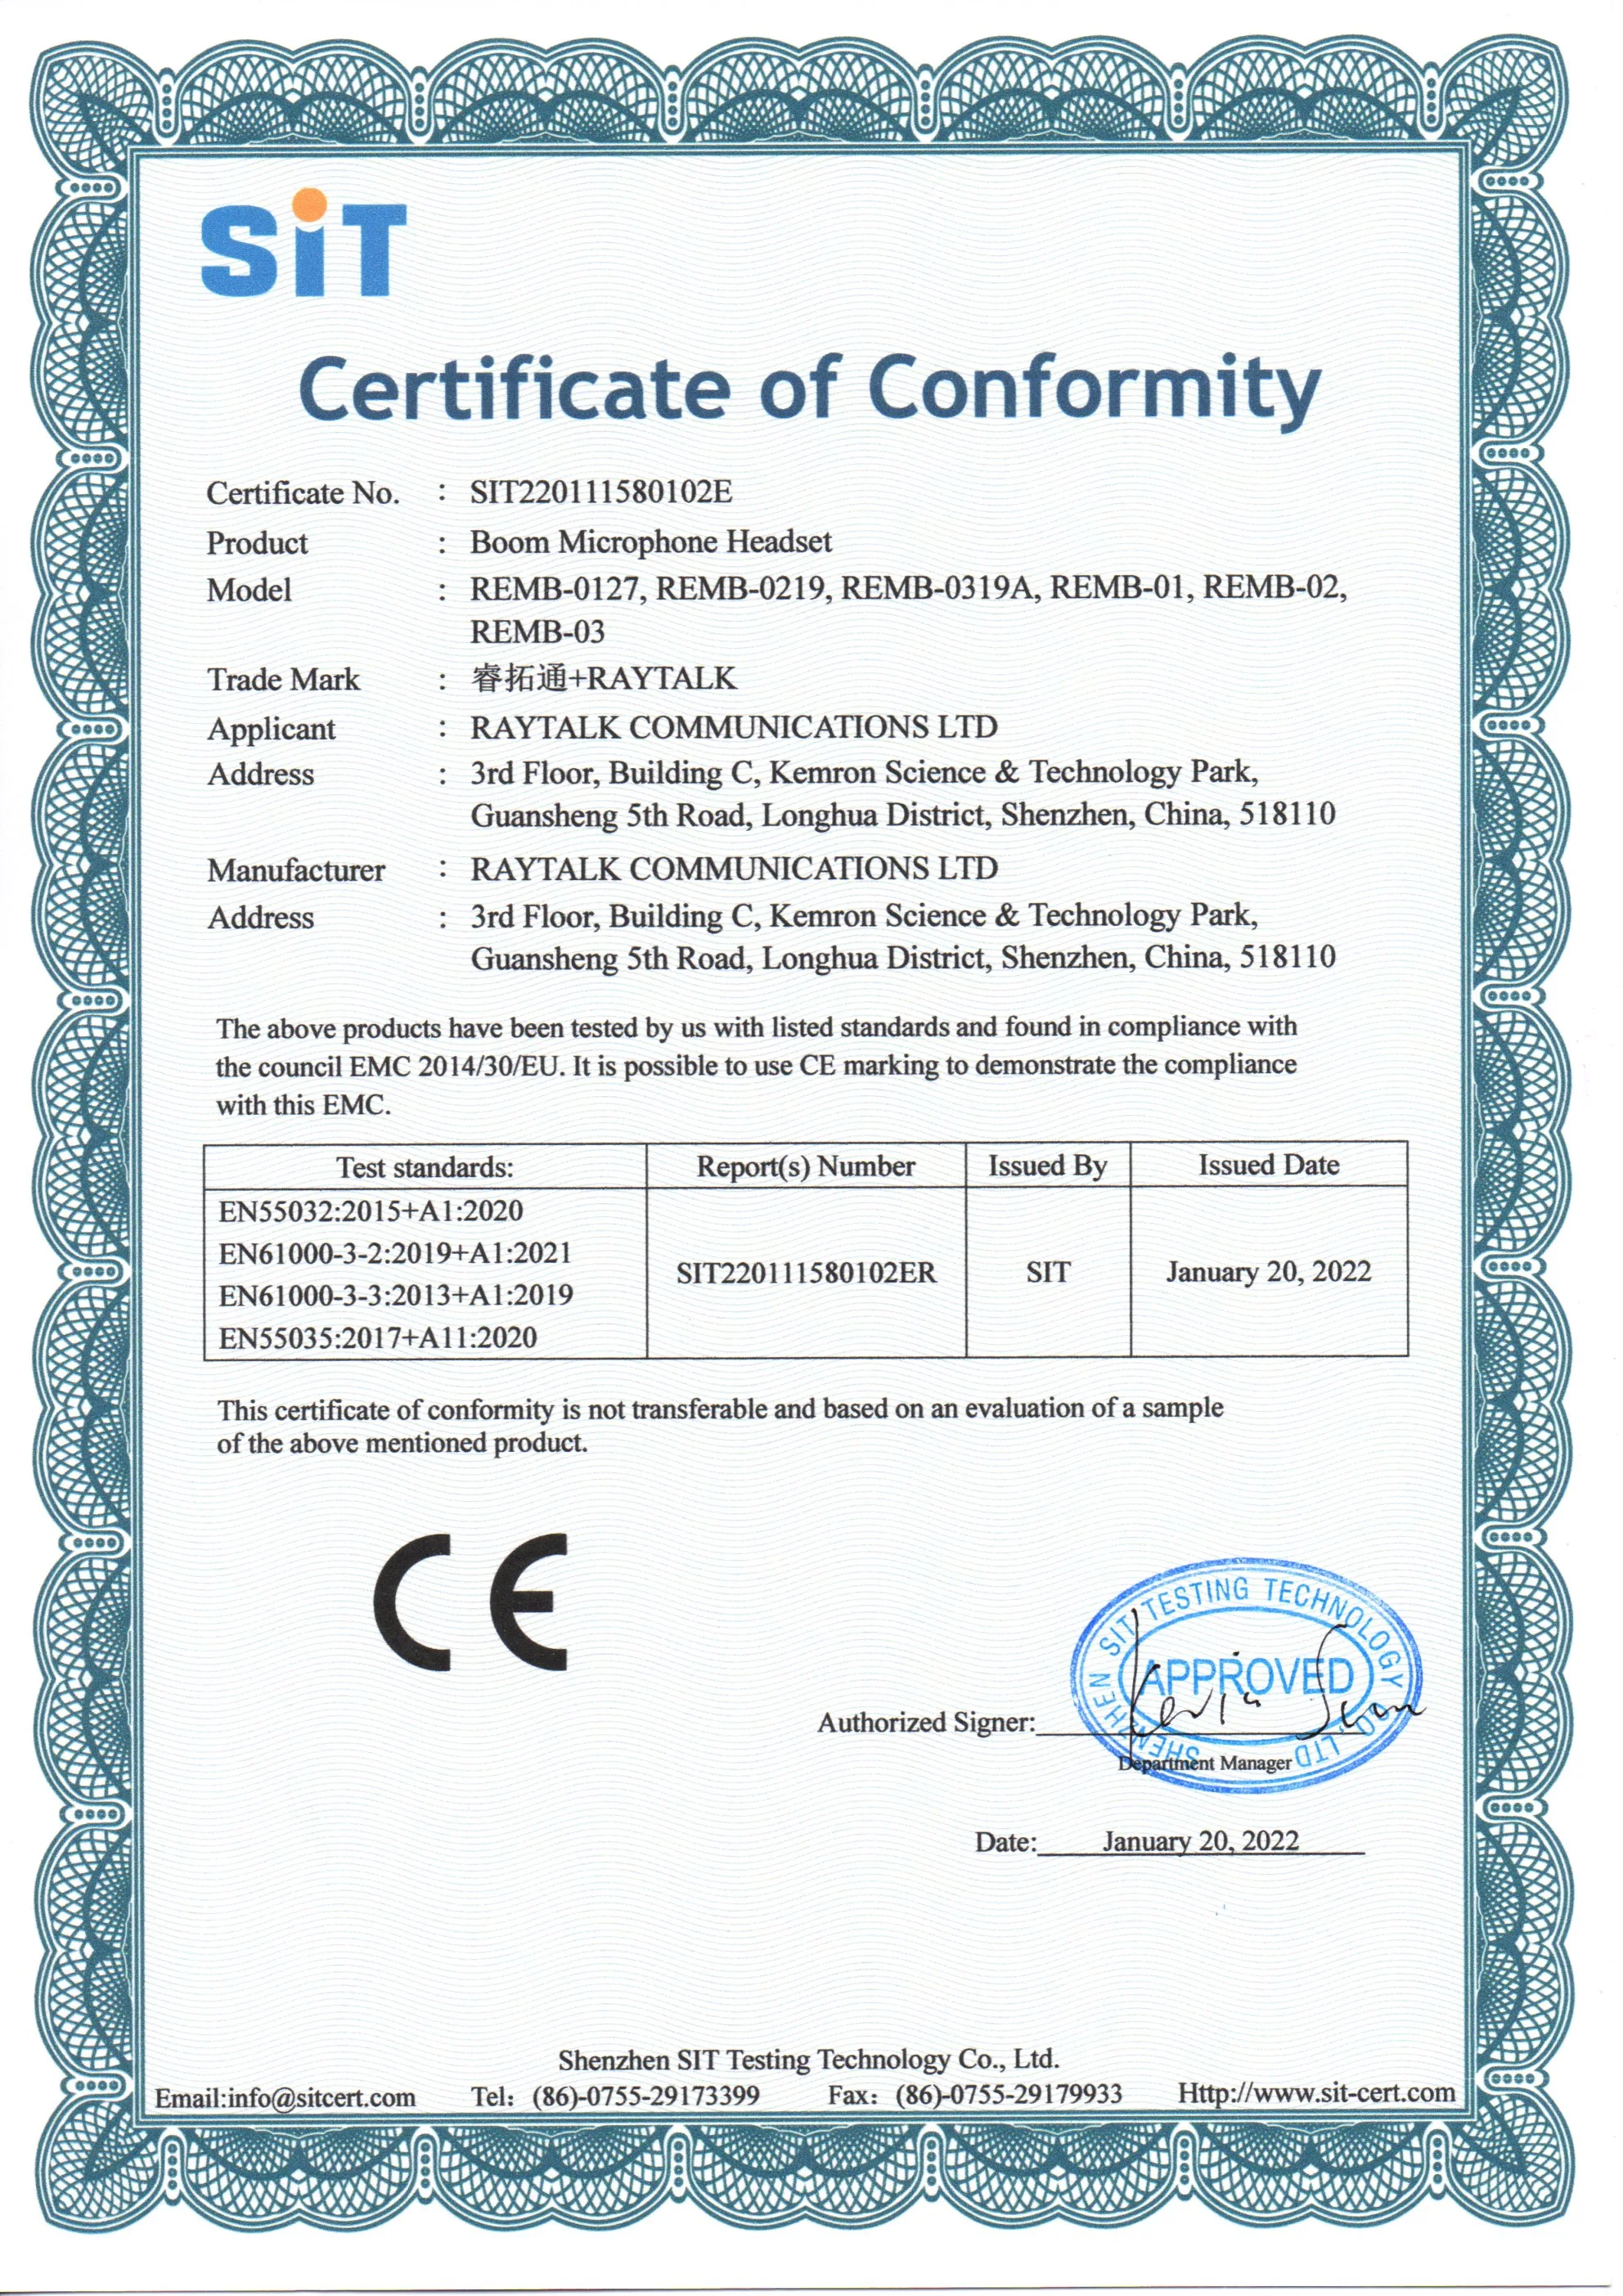 RAYTALK Boom Microphone Headset Certificate of Conformity